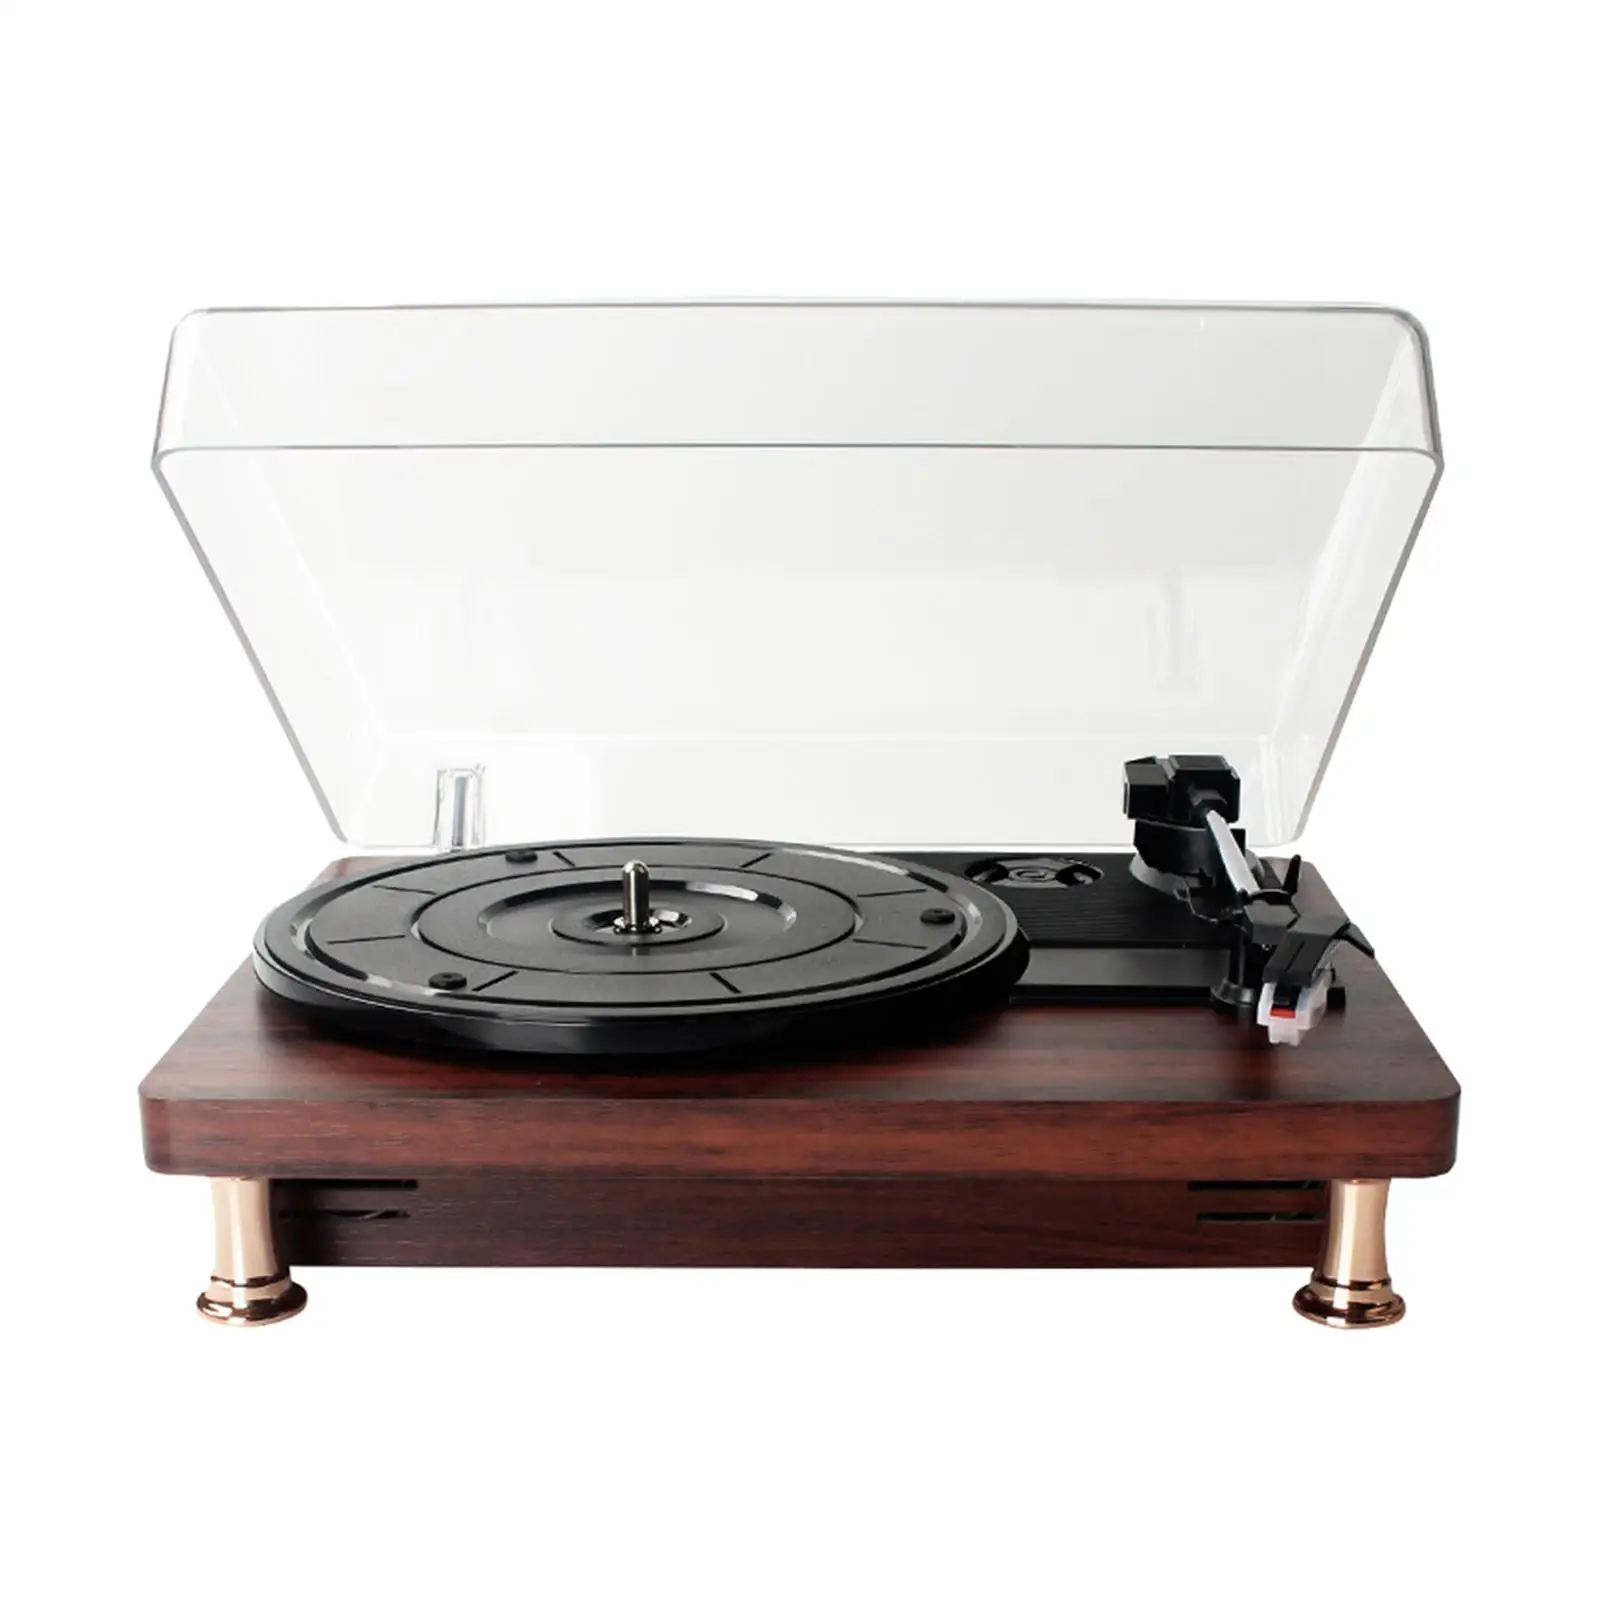 Retro Style Vinyl Record Player Turntable 3 Speeds Built in Speakers Phonograph